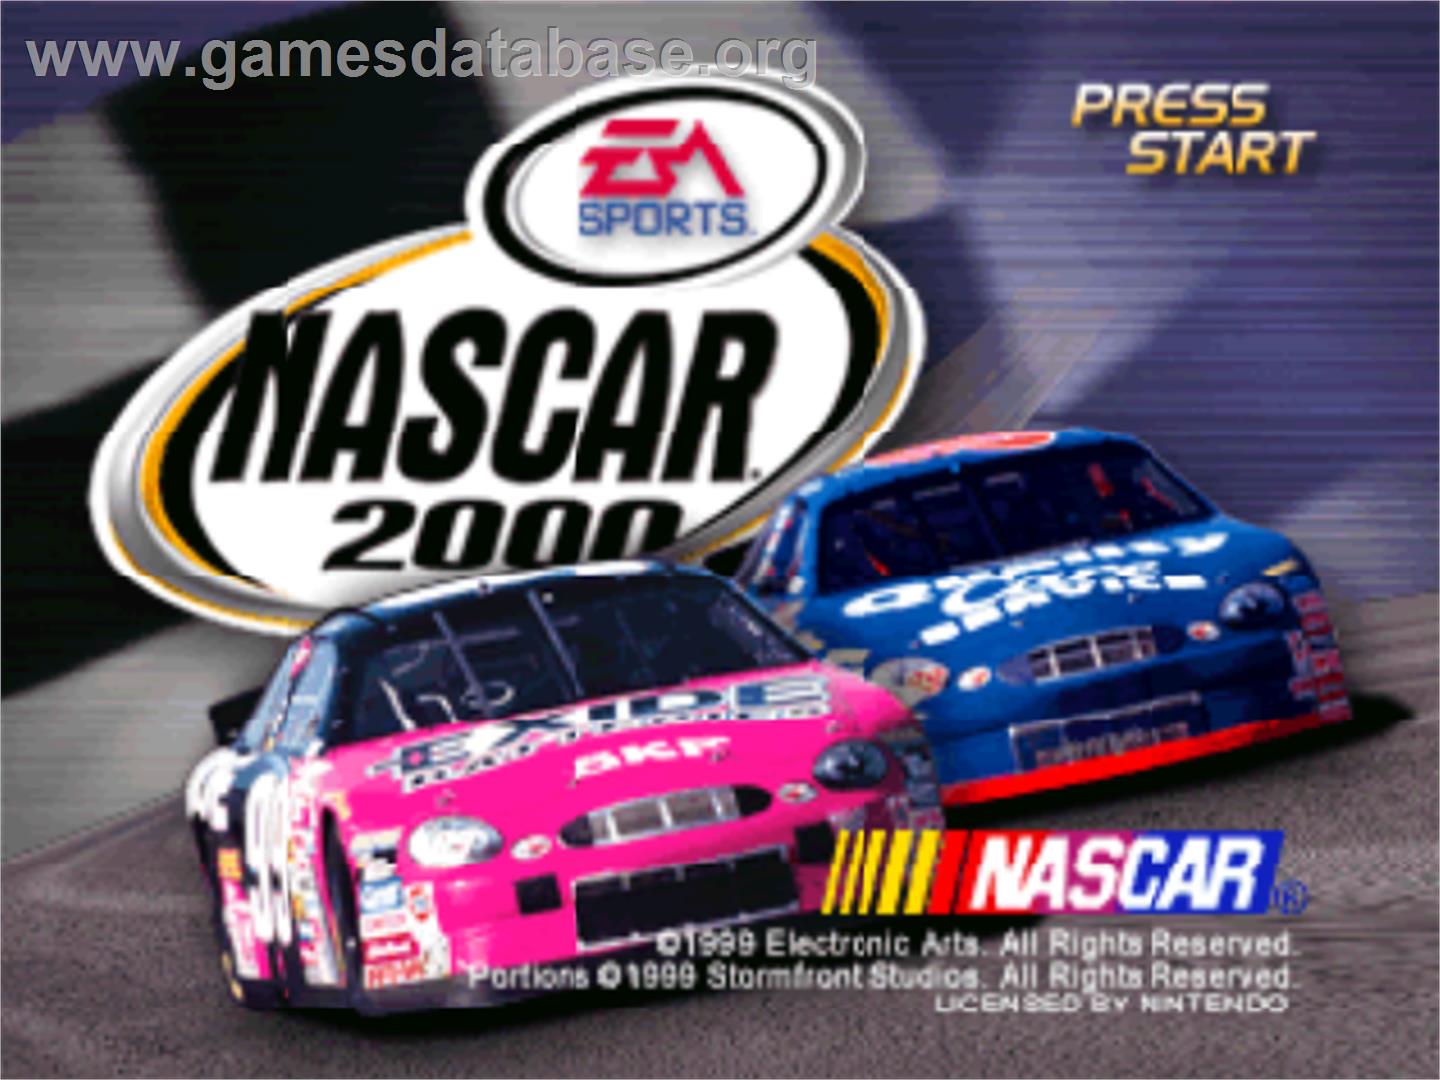 NASCAR 2000 - Nintendo N64 - Artwork - Title Screen